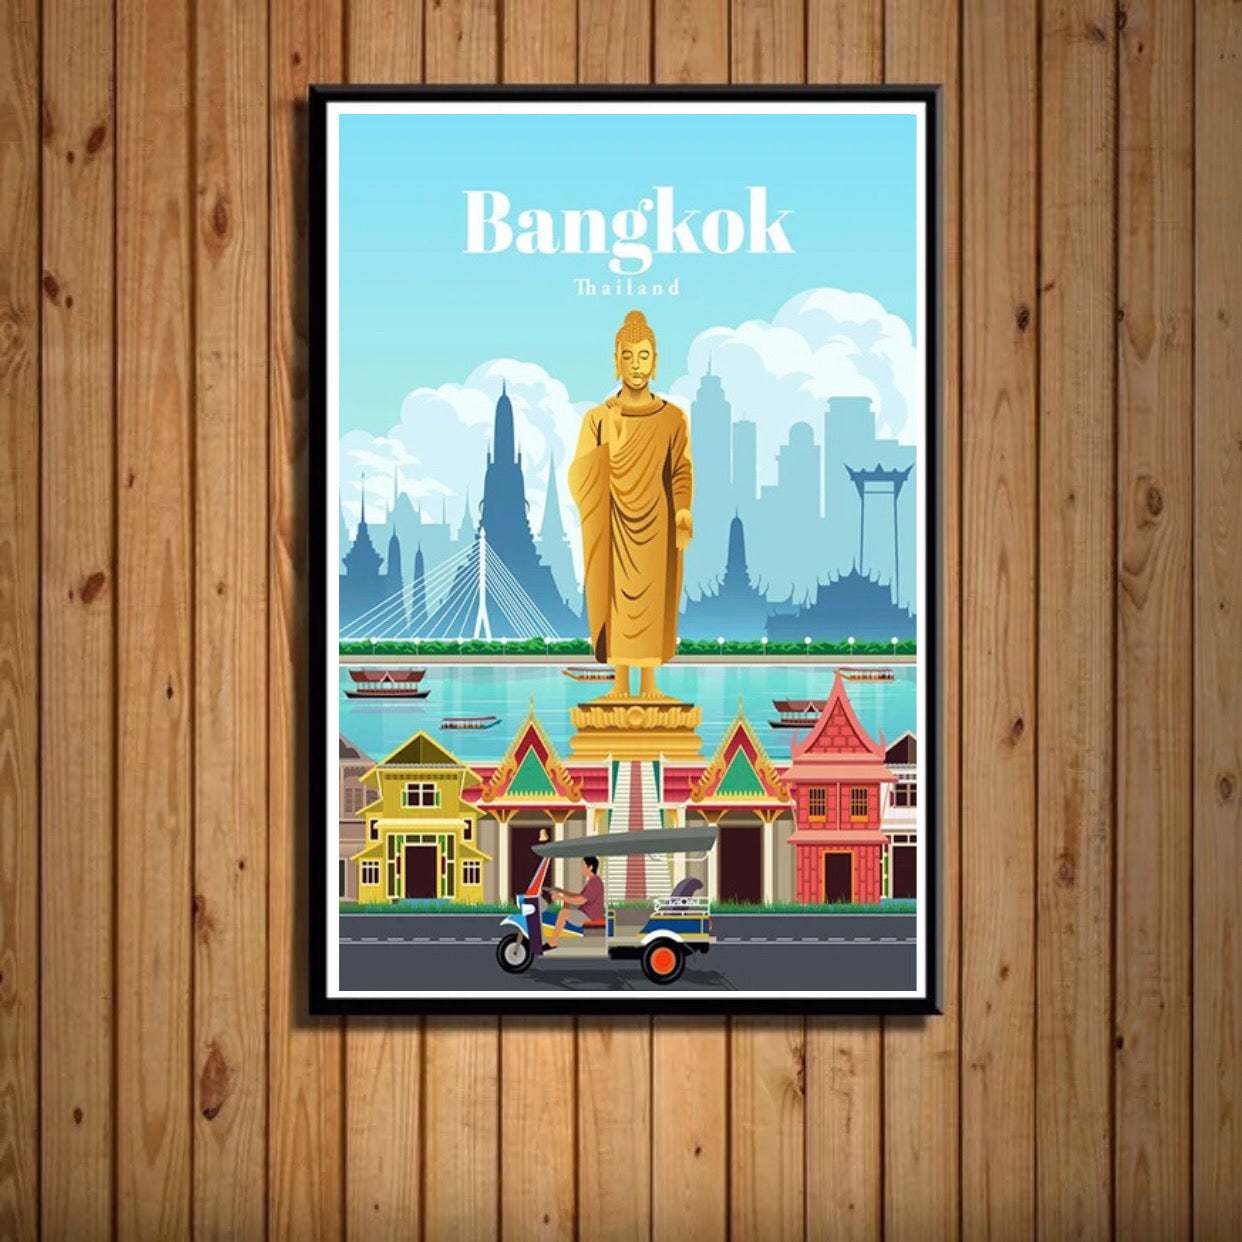 bangkok, thailand travel poster